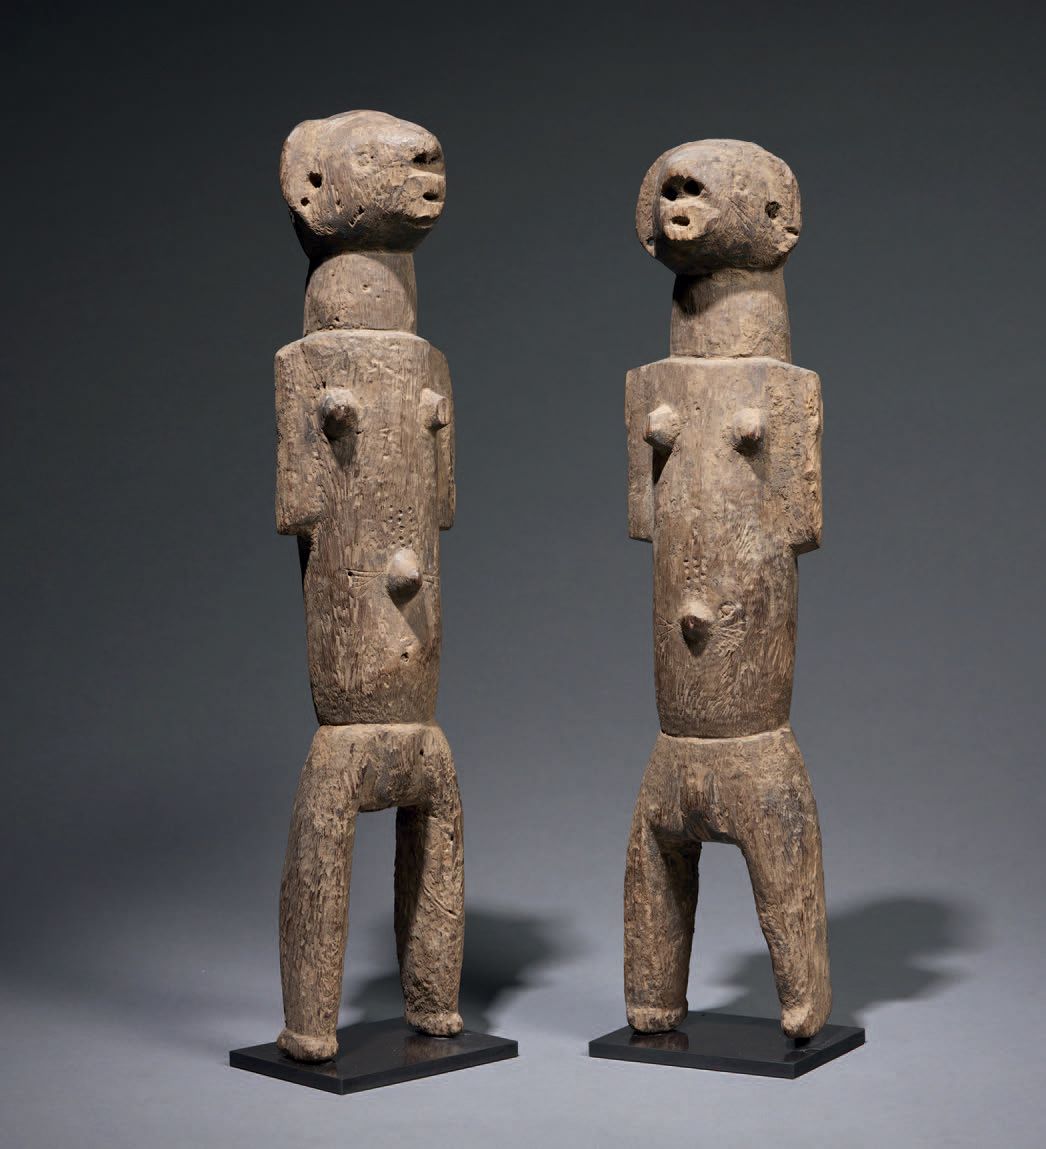 Null 洛索夫妇
多哥
木头
高37和38厘米
一对洛索雕像，具有象形的人物。他们被显示为沿身体短距离站立，腿部弯曲，下巴高昂。他们的身体上布满了疤痕。